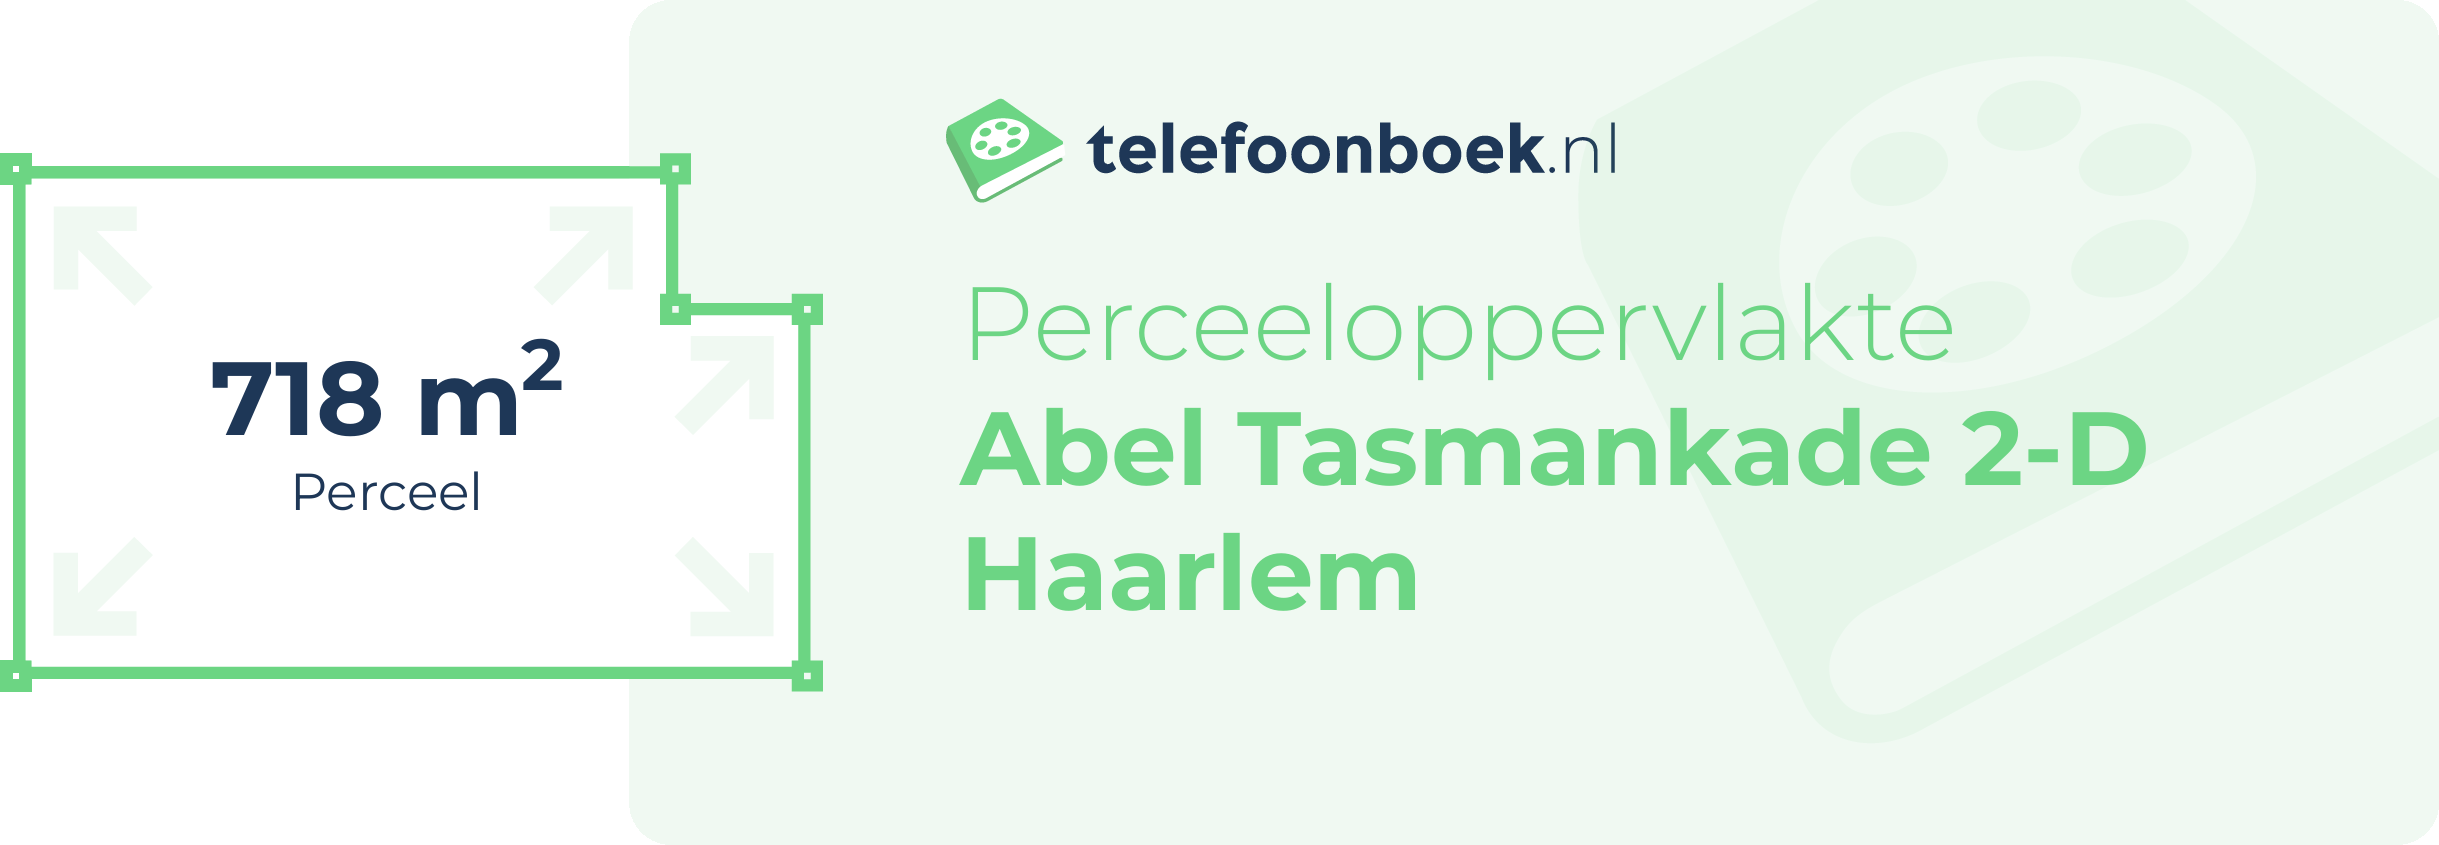 Perceeloppervlakte Abel Tasmankade 2-D Haarlem